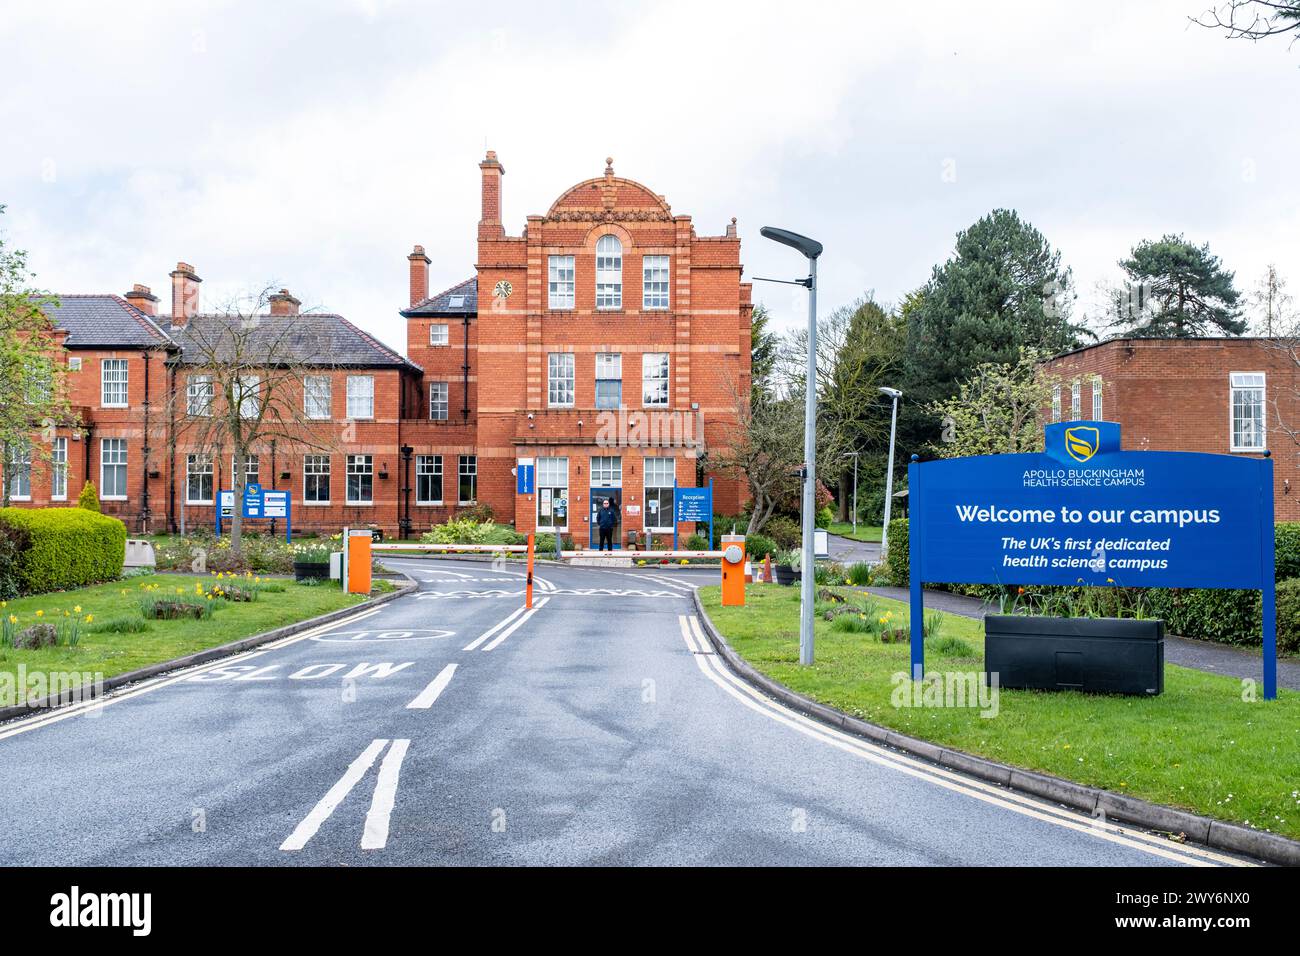 Apollo Buckingham Health Science Campus in Crewe, Großbritannien Stockfoto